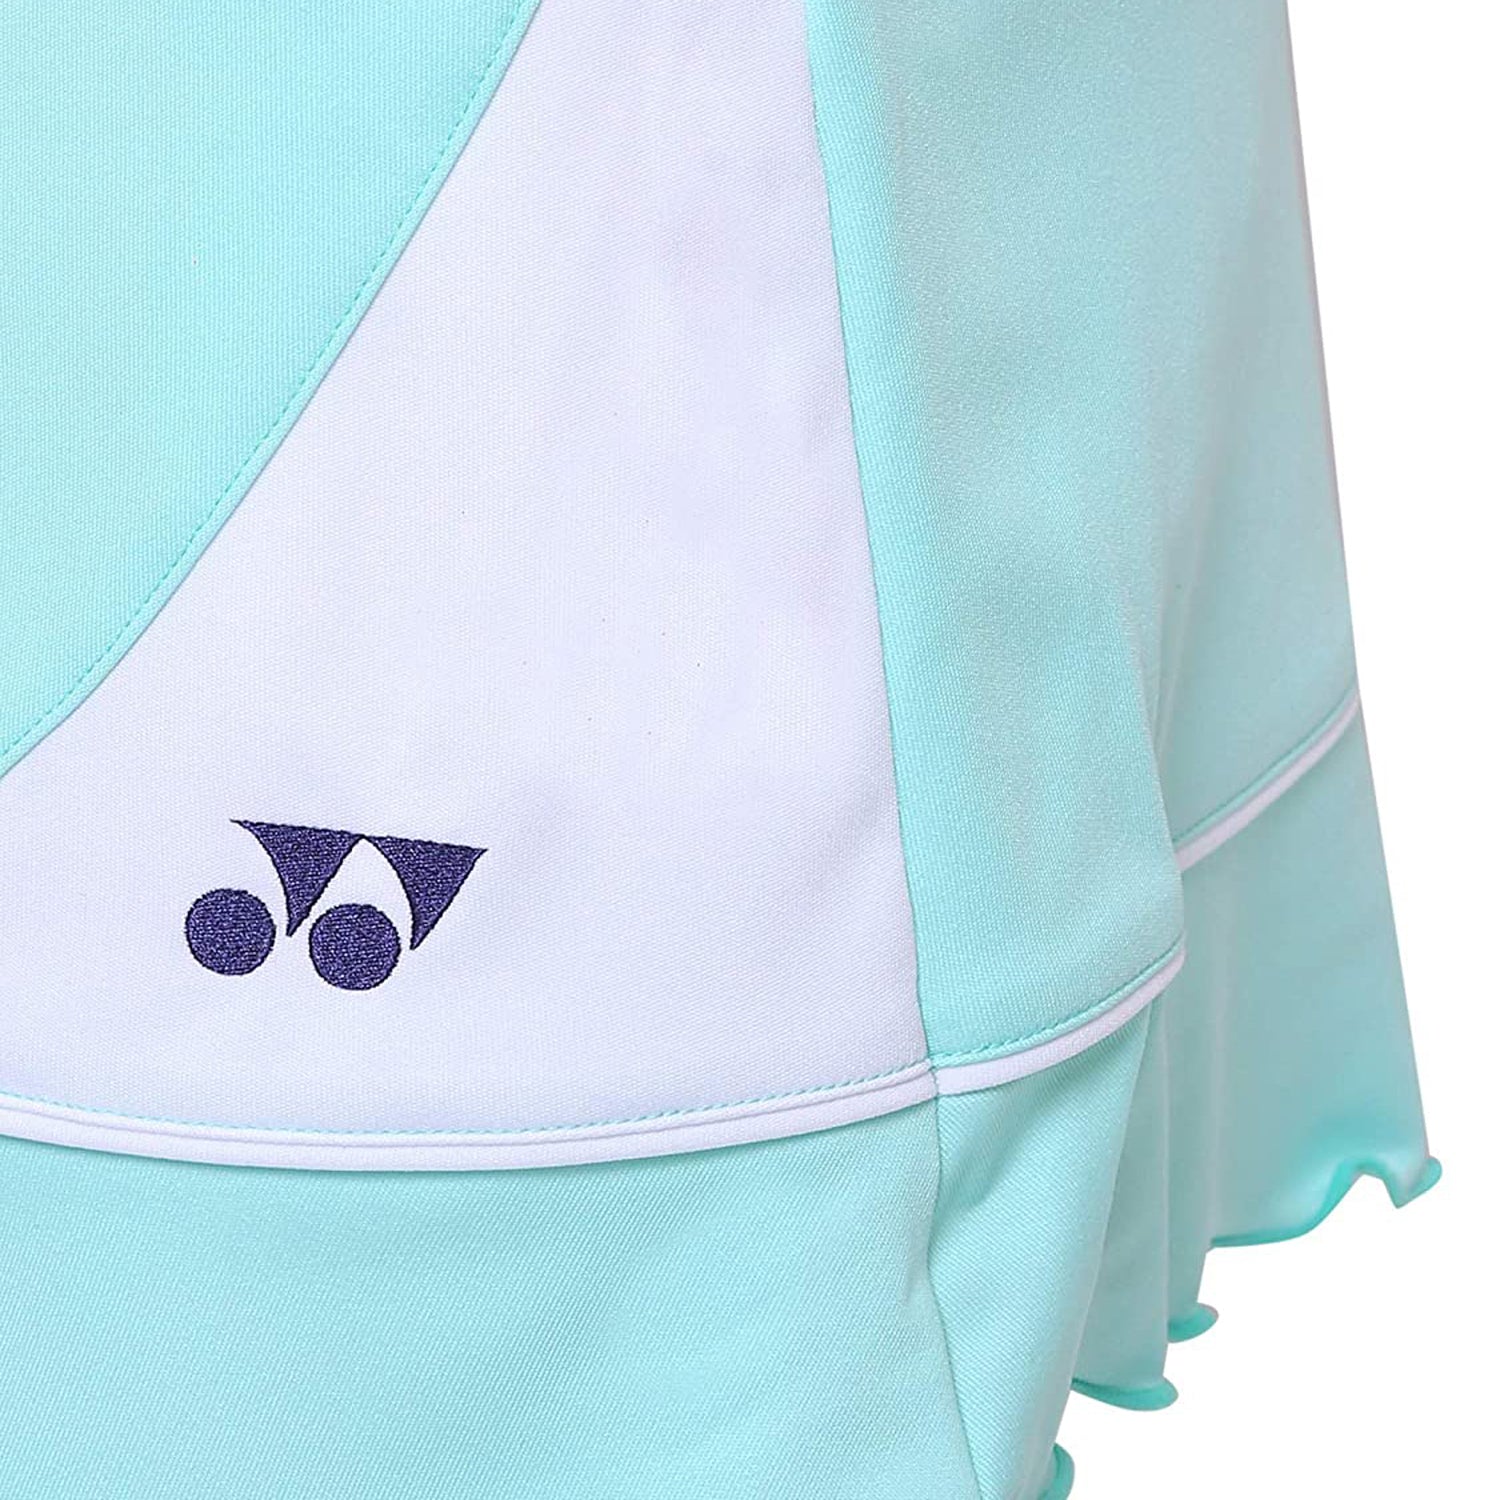 Yonex 1133 Skirt for Women, Cabbage - Best Price online Prokicksports.com